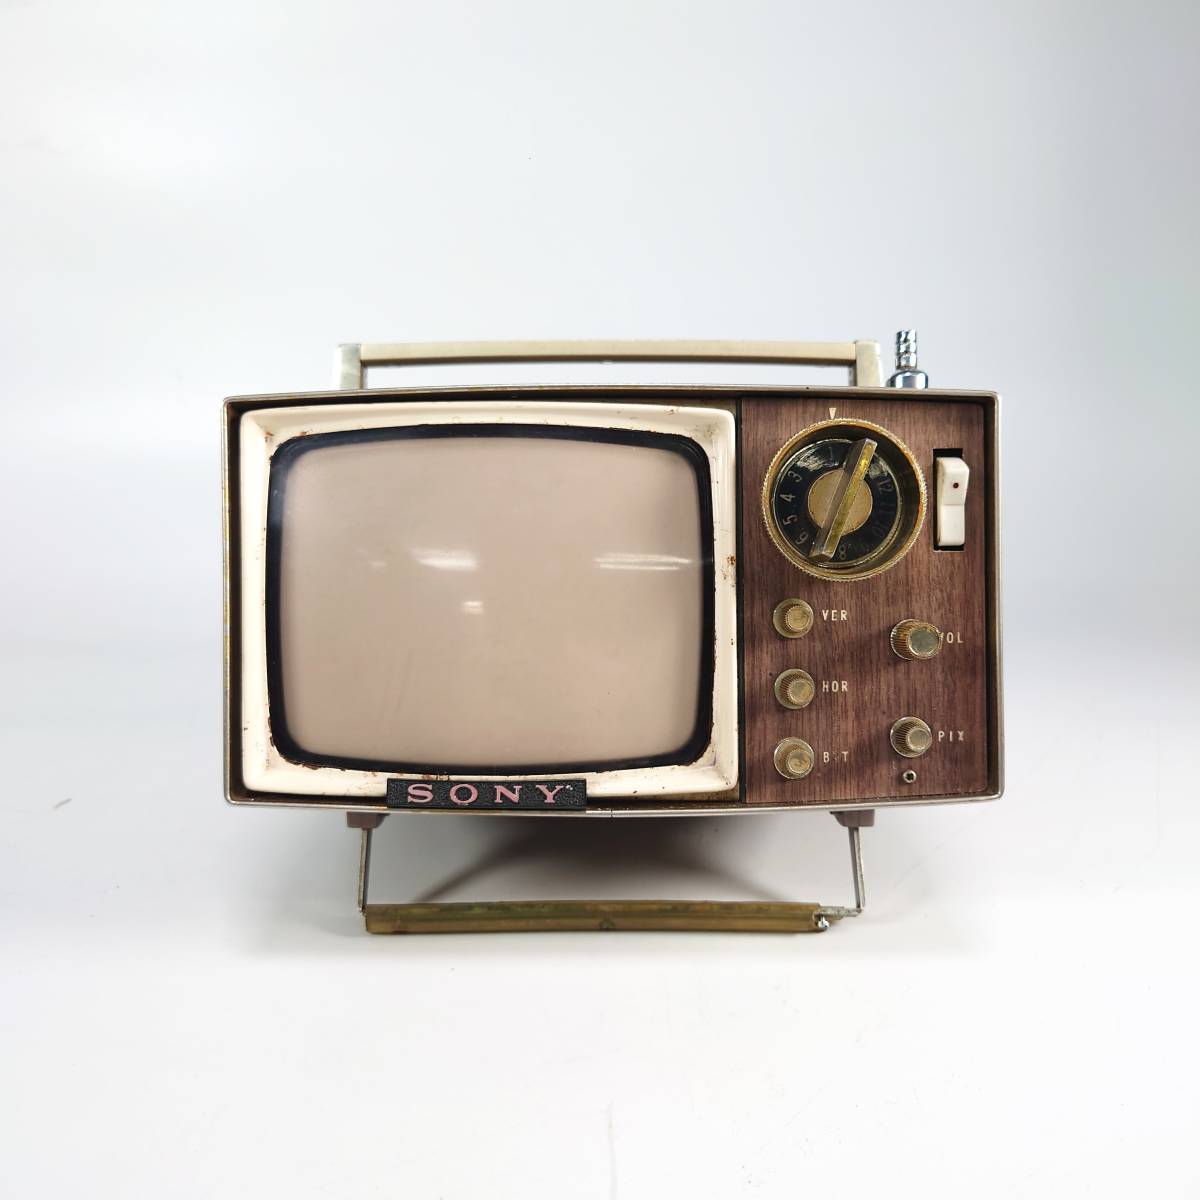 SONY トランジスタテレビ 5-205 アナログテレビ ブラウン管 昭和レトロ ヴィンテージ ソニー 当時物 現状品